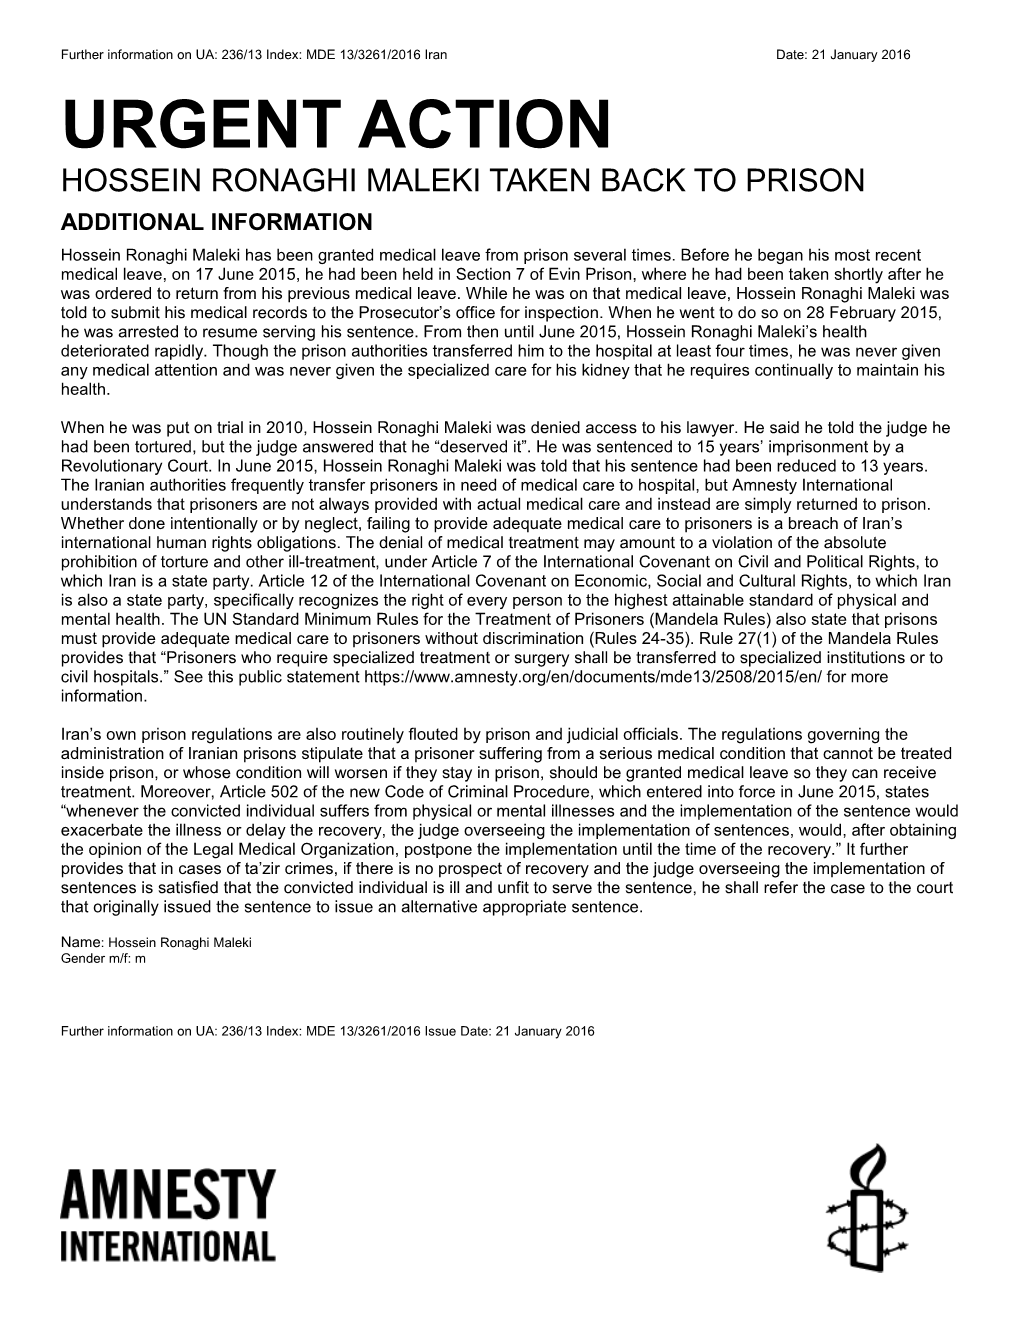 Hossein Ronaghi Maleki Taken Back to Prison